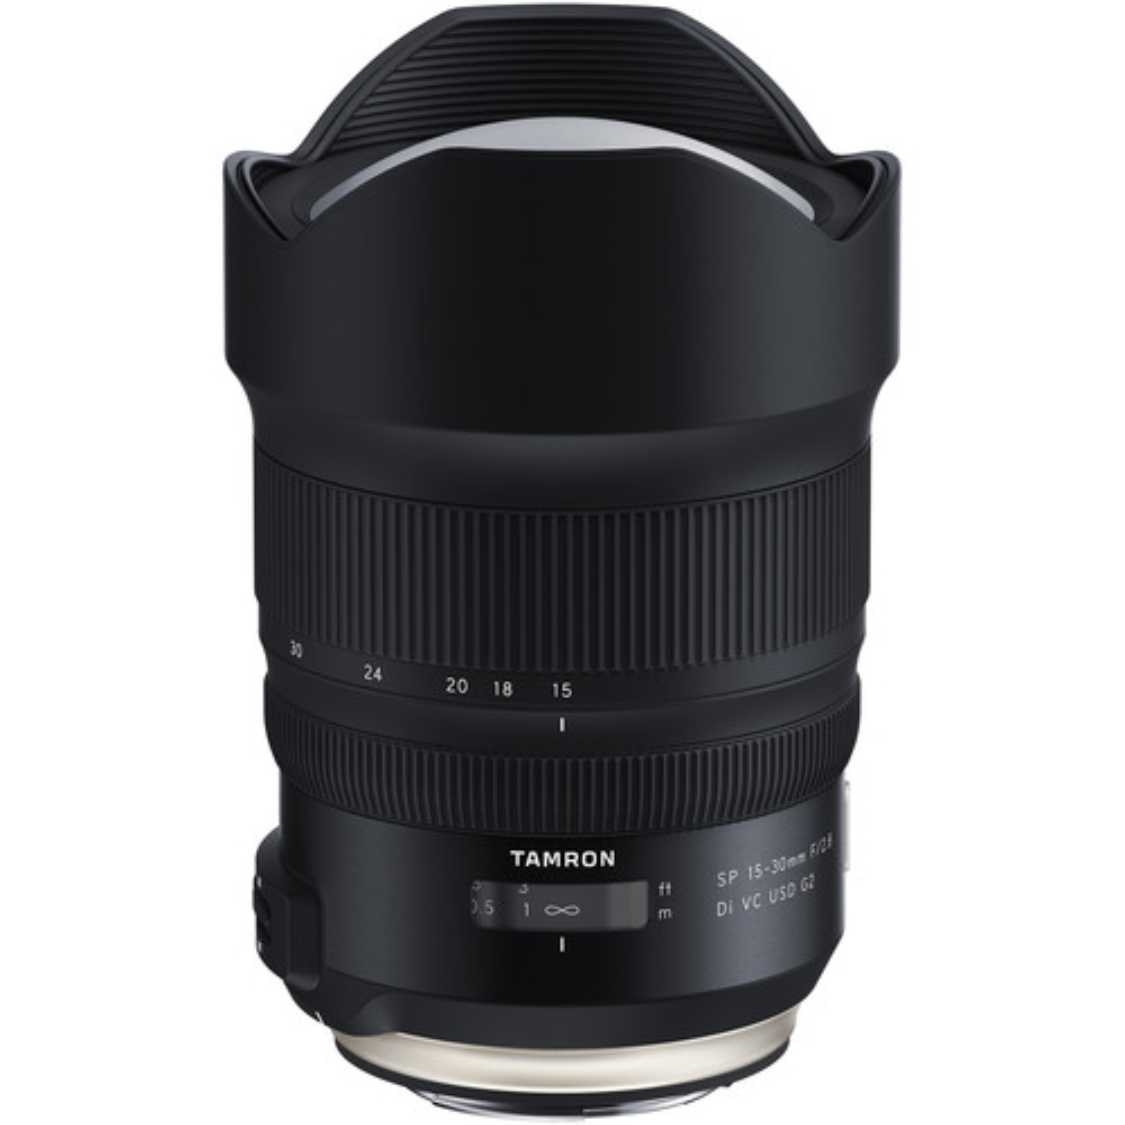 Tamron 15-30mm F2.8 G2 DI VC USD EOS Lens | McBain Camera